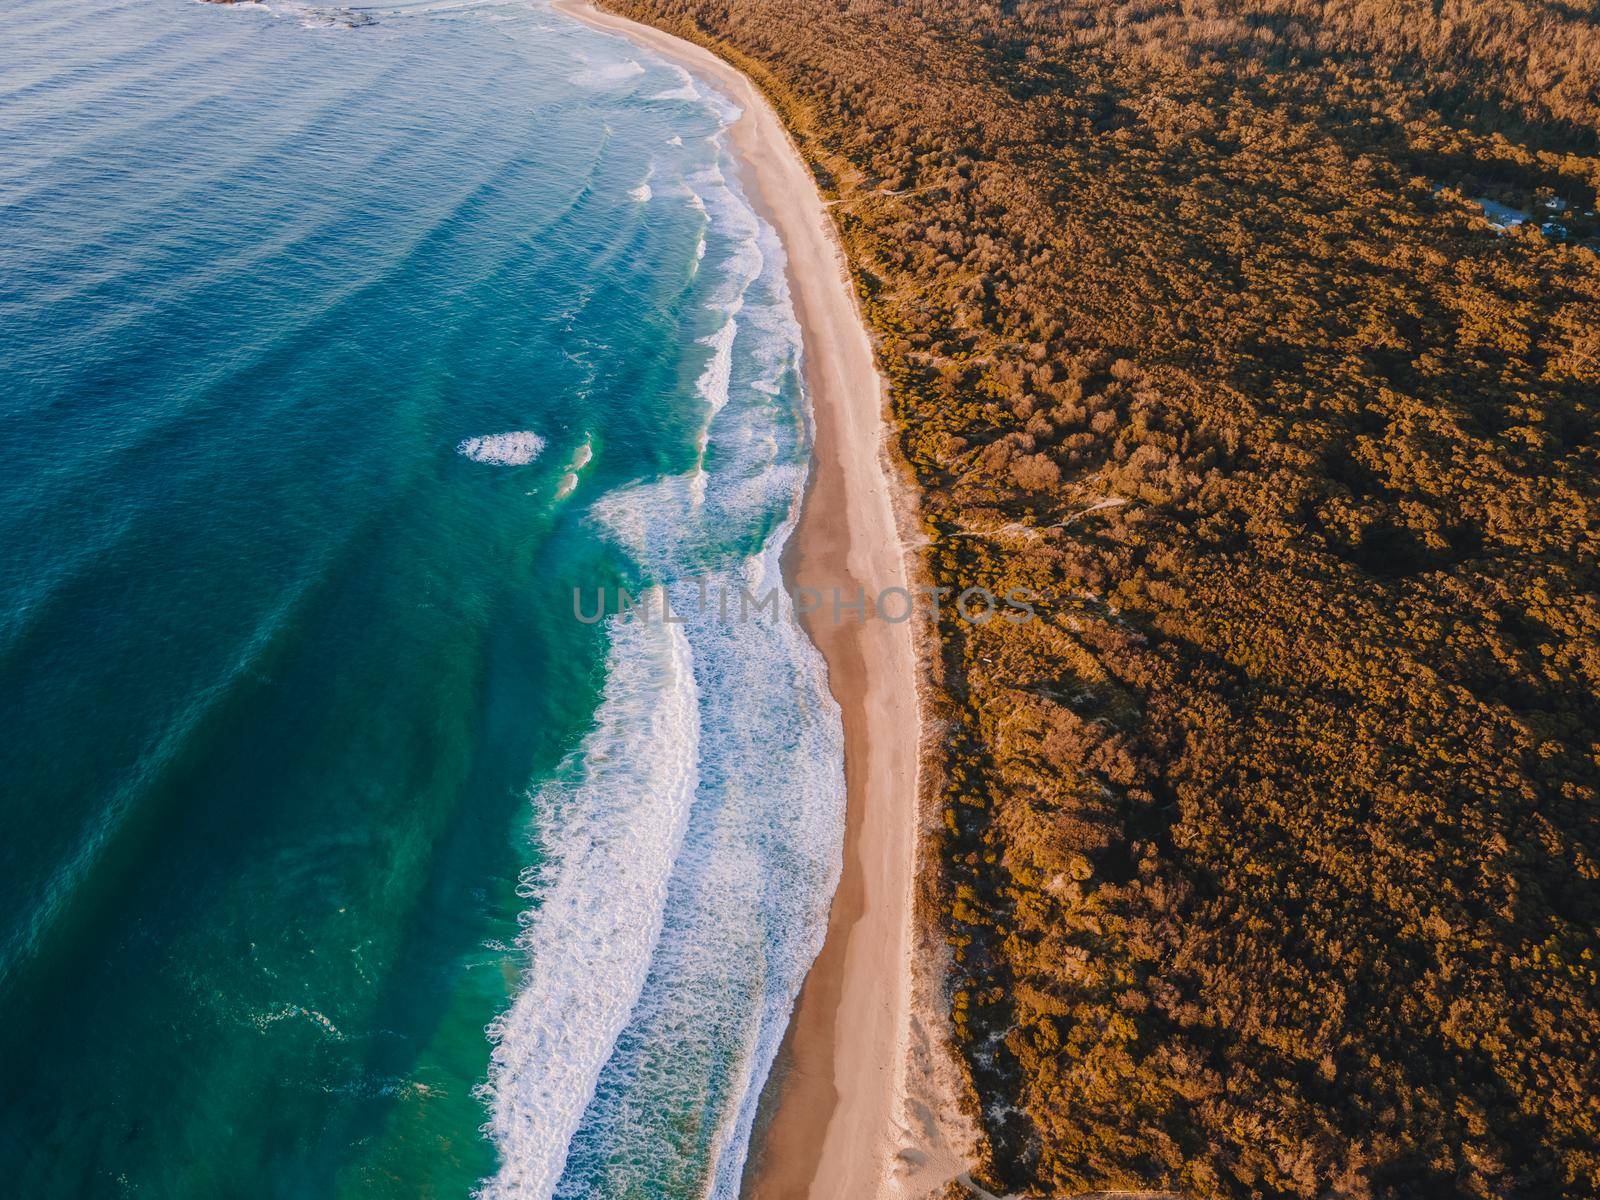 Lake Tabourie beach, Australia. High quality photo